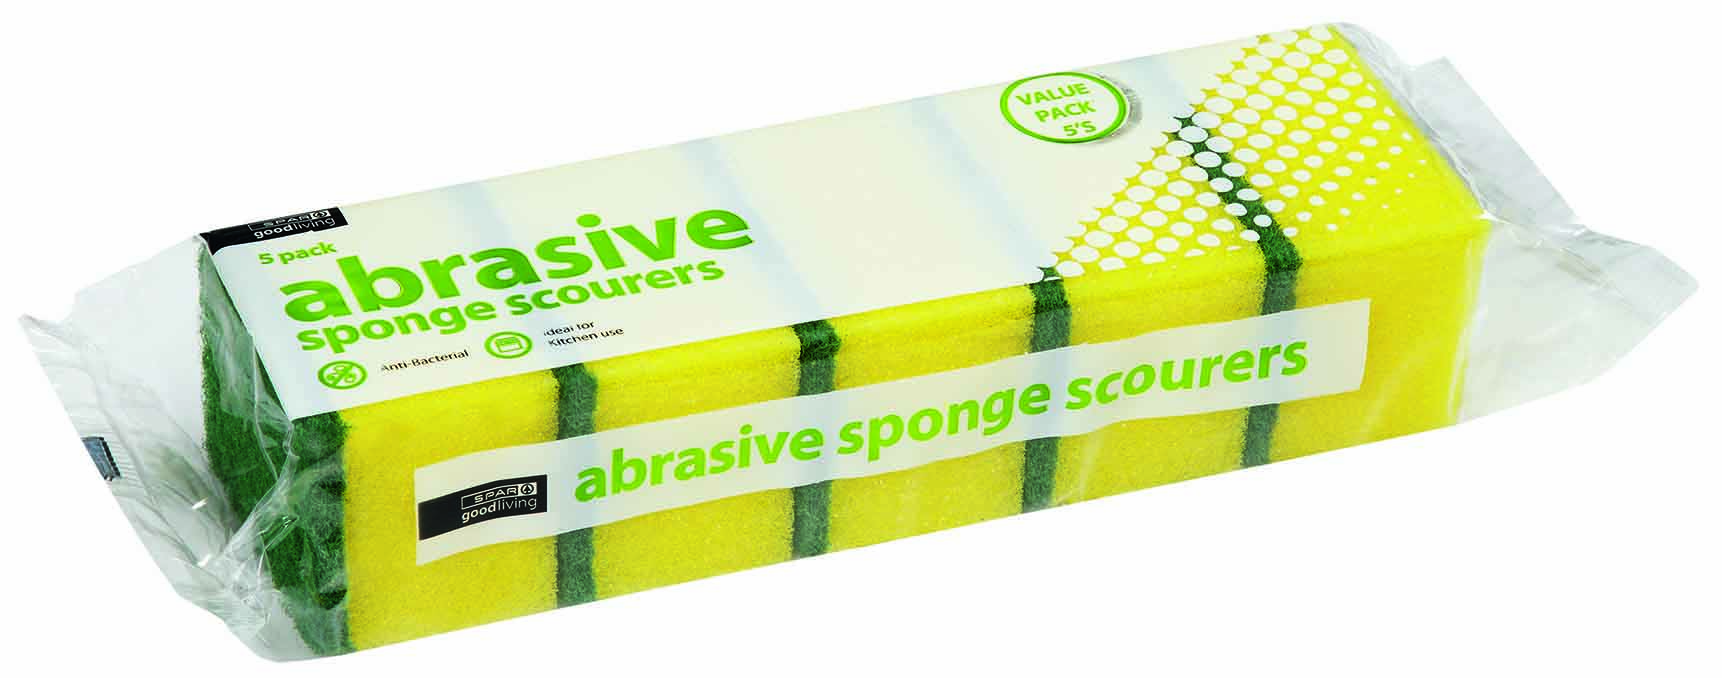 sponge scourers abrasive - 5 pack